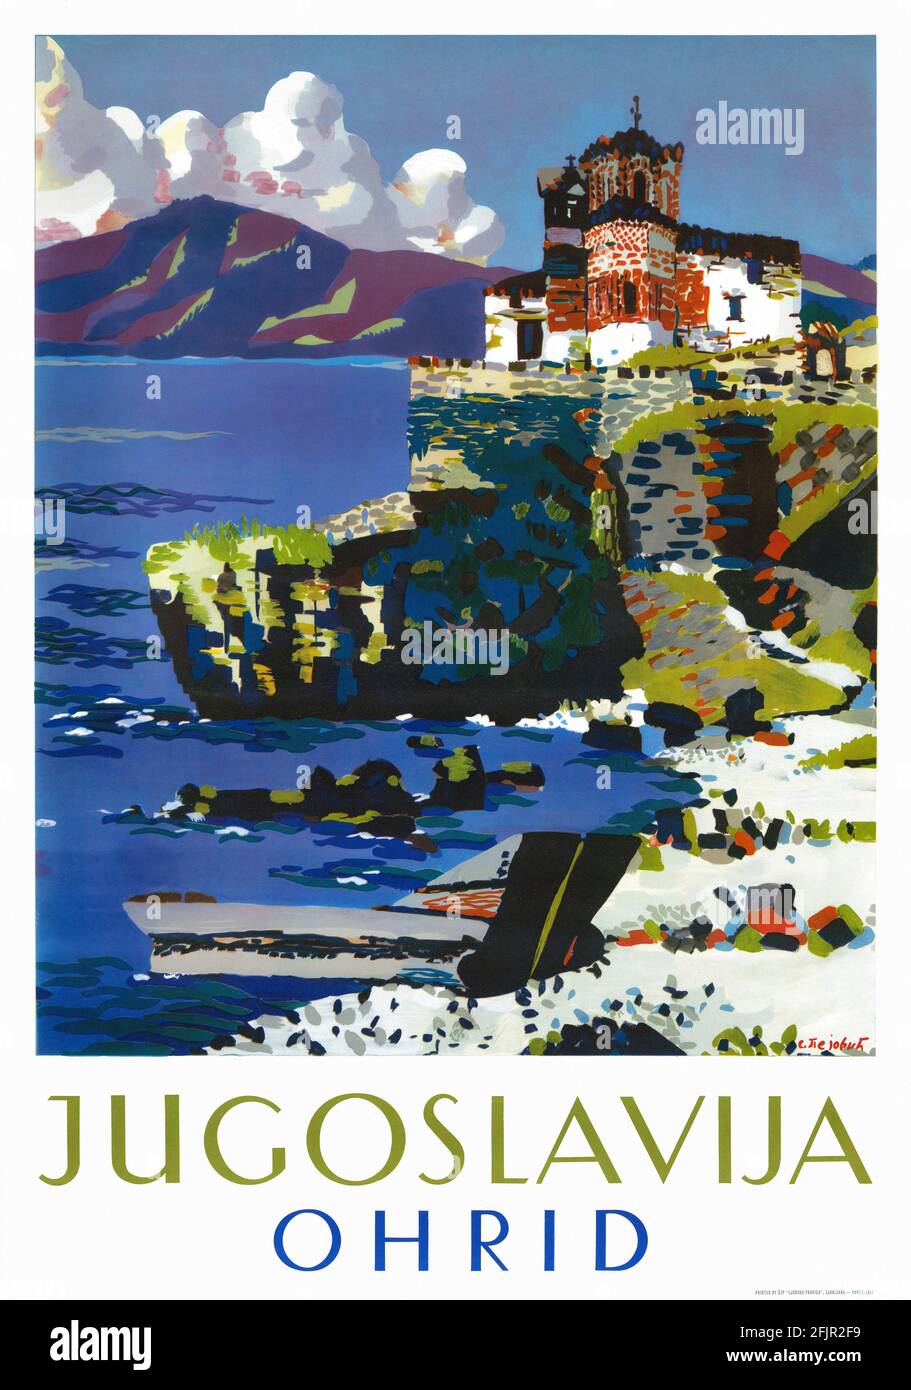 Jugoslavija Ohrid by Edo Murtic (1921-2004). Restored vintage poster published in 1960 in Yugoslavia. Stock Photo